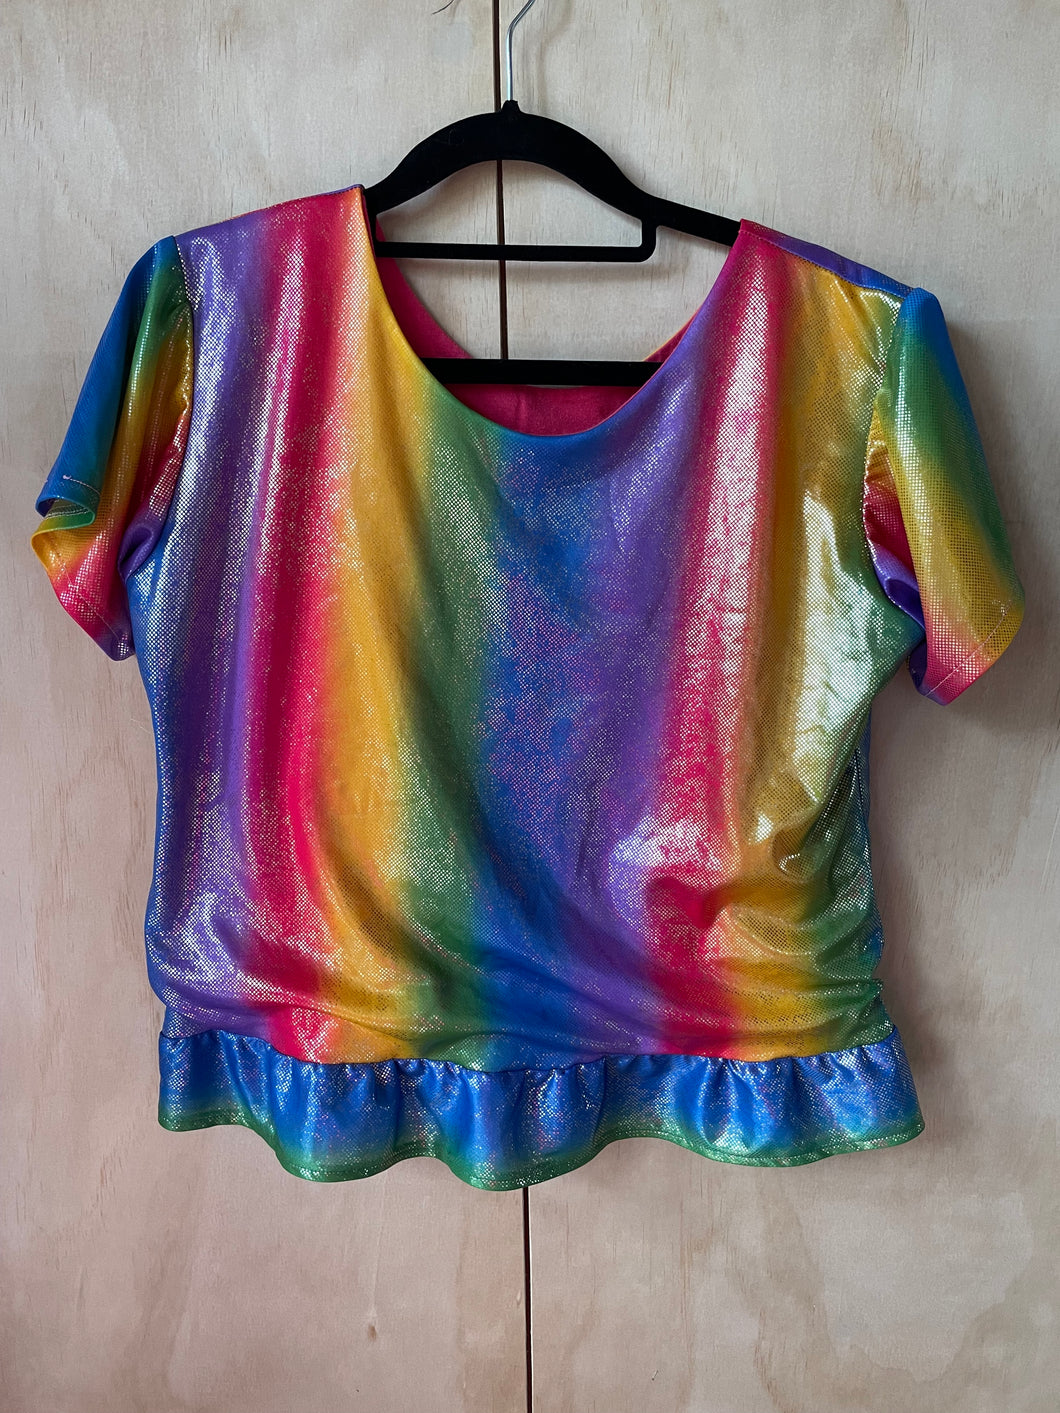 shint rainbow tshirt on clothes hanger